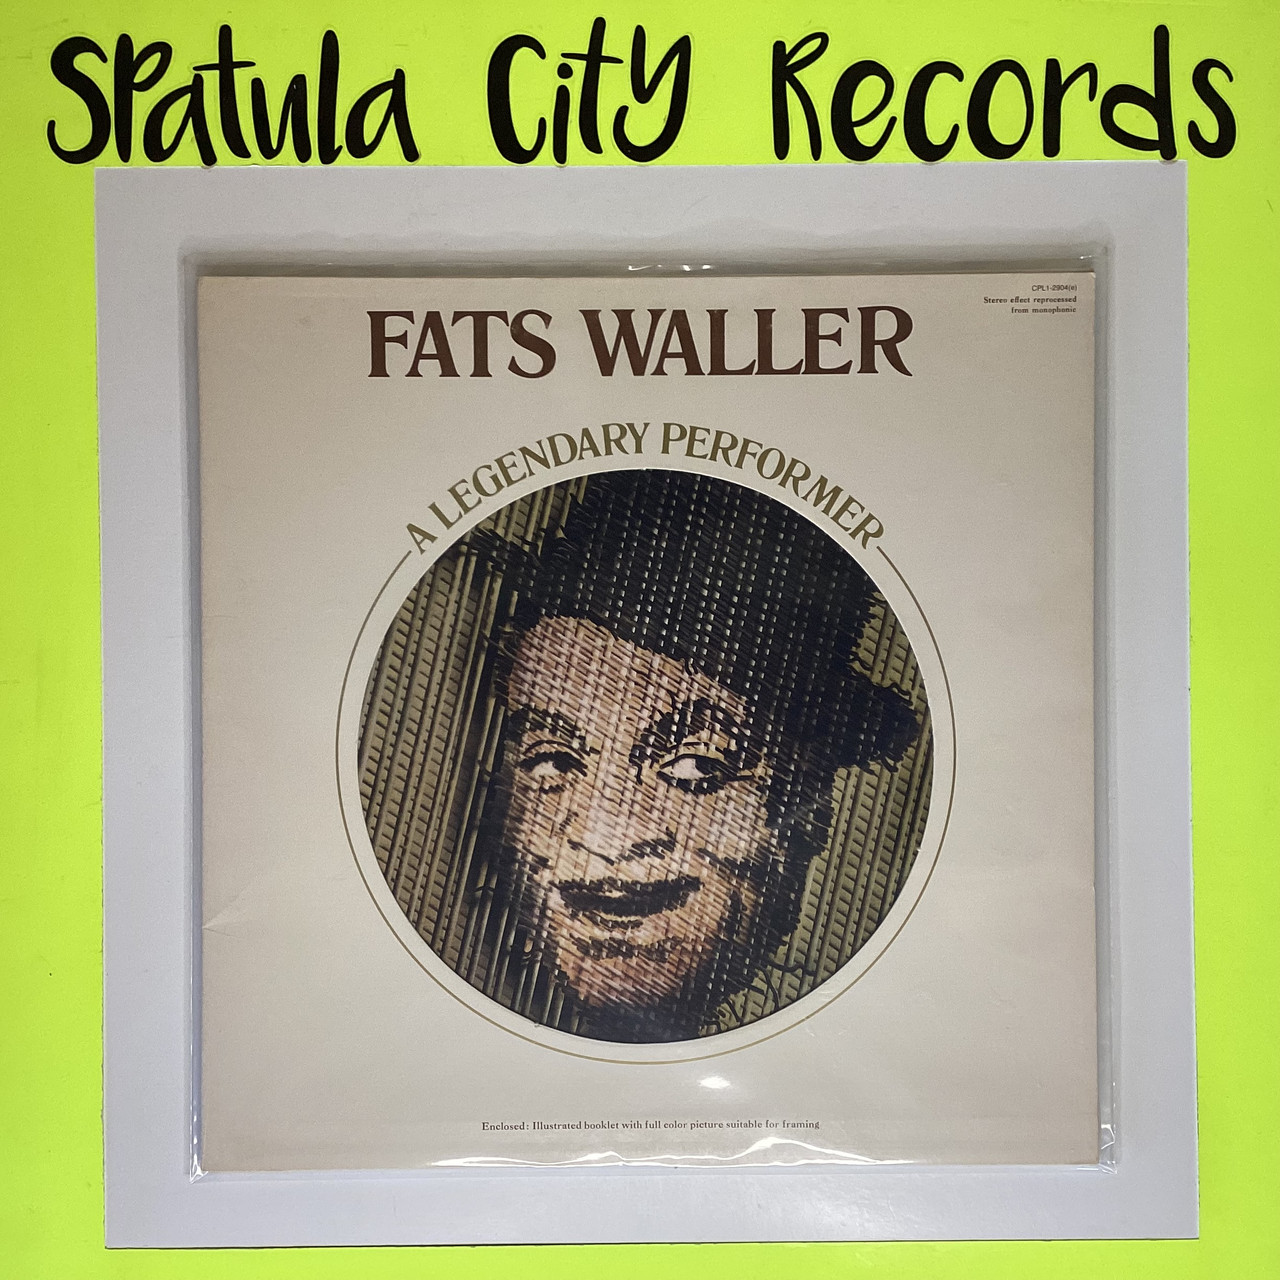 Fats Waller - A Legendary Performer - vinyl record LP